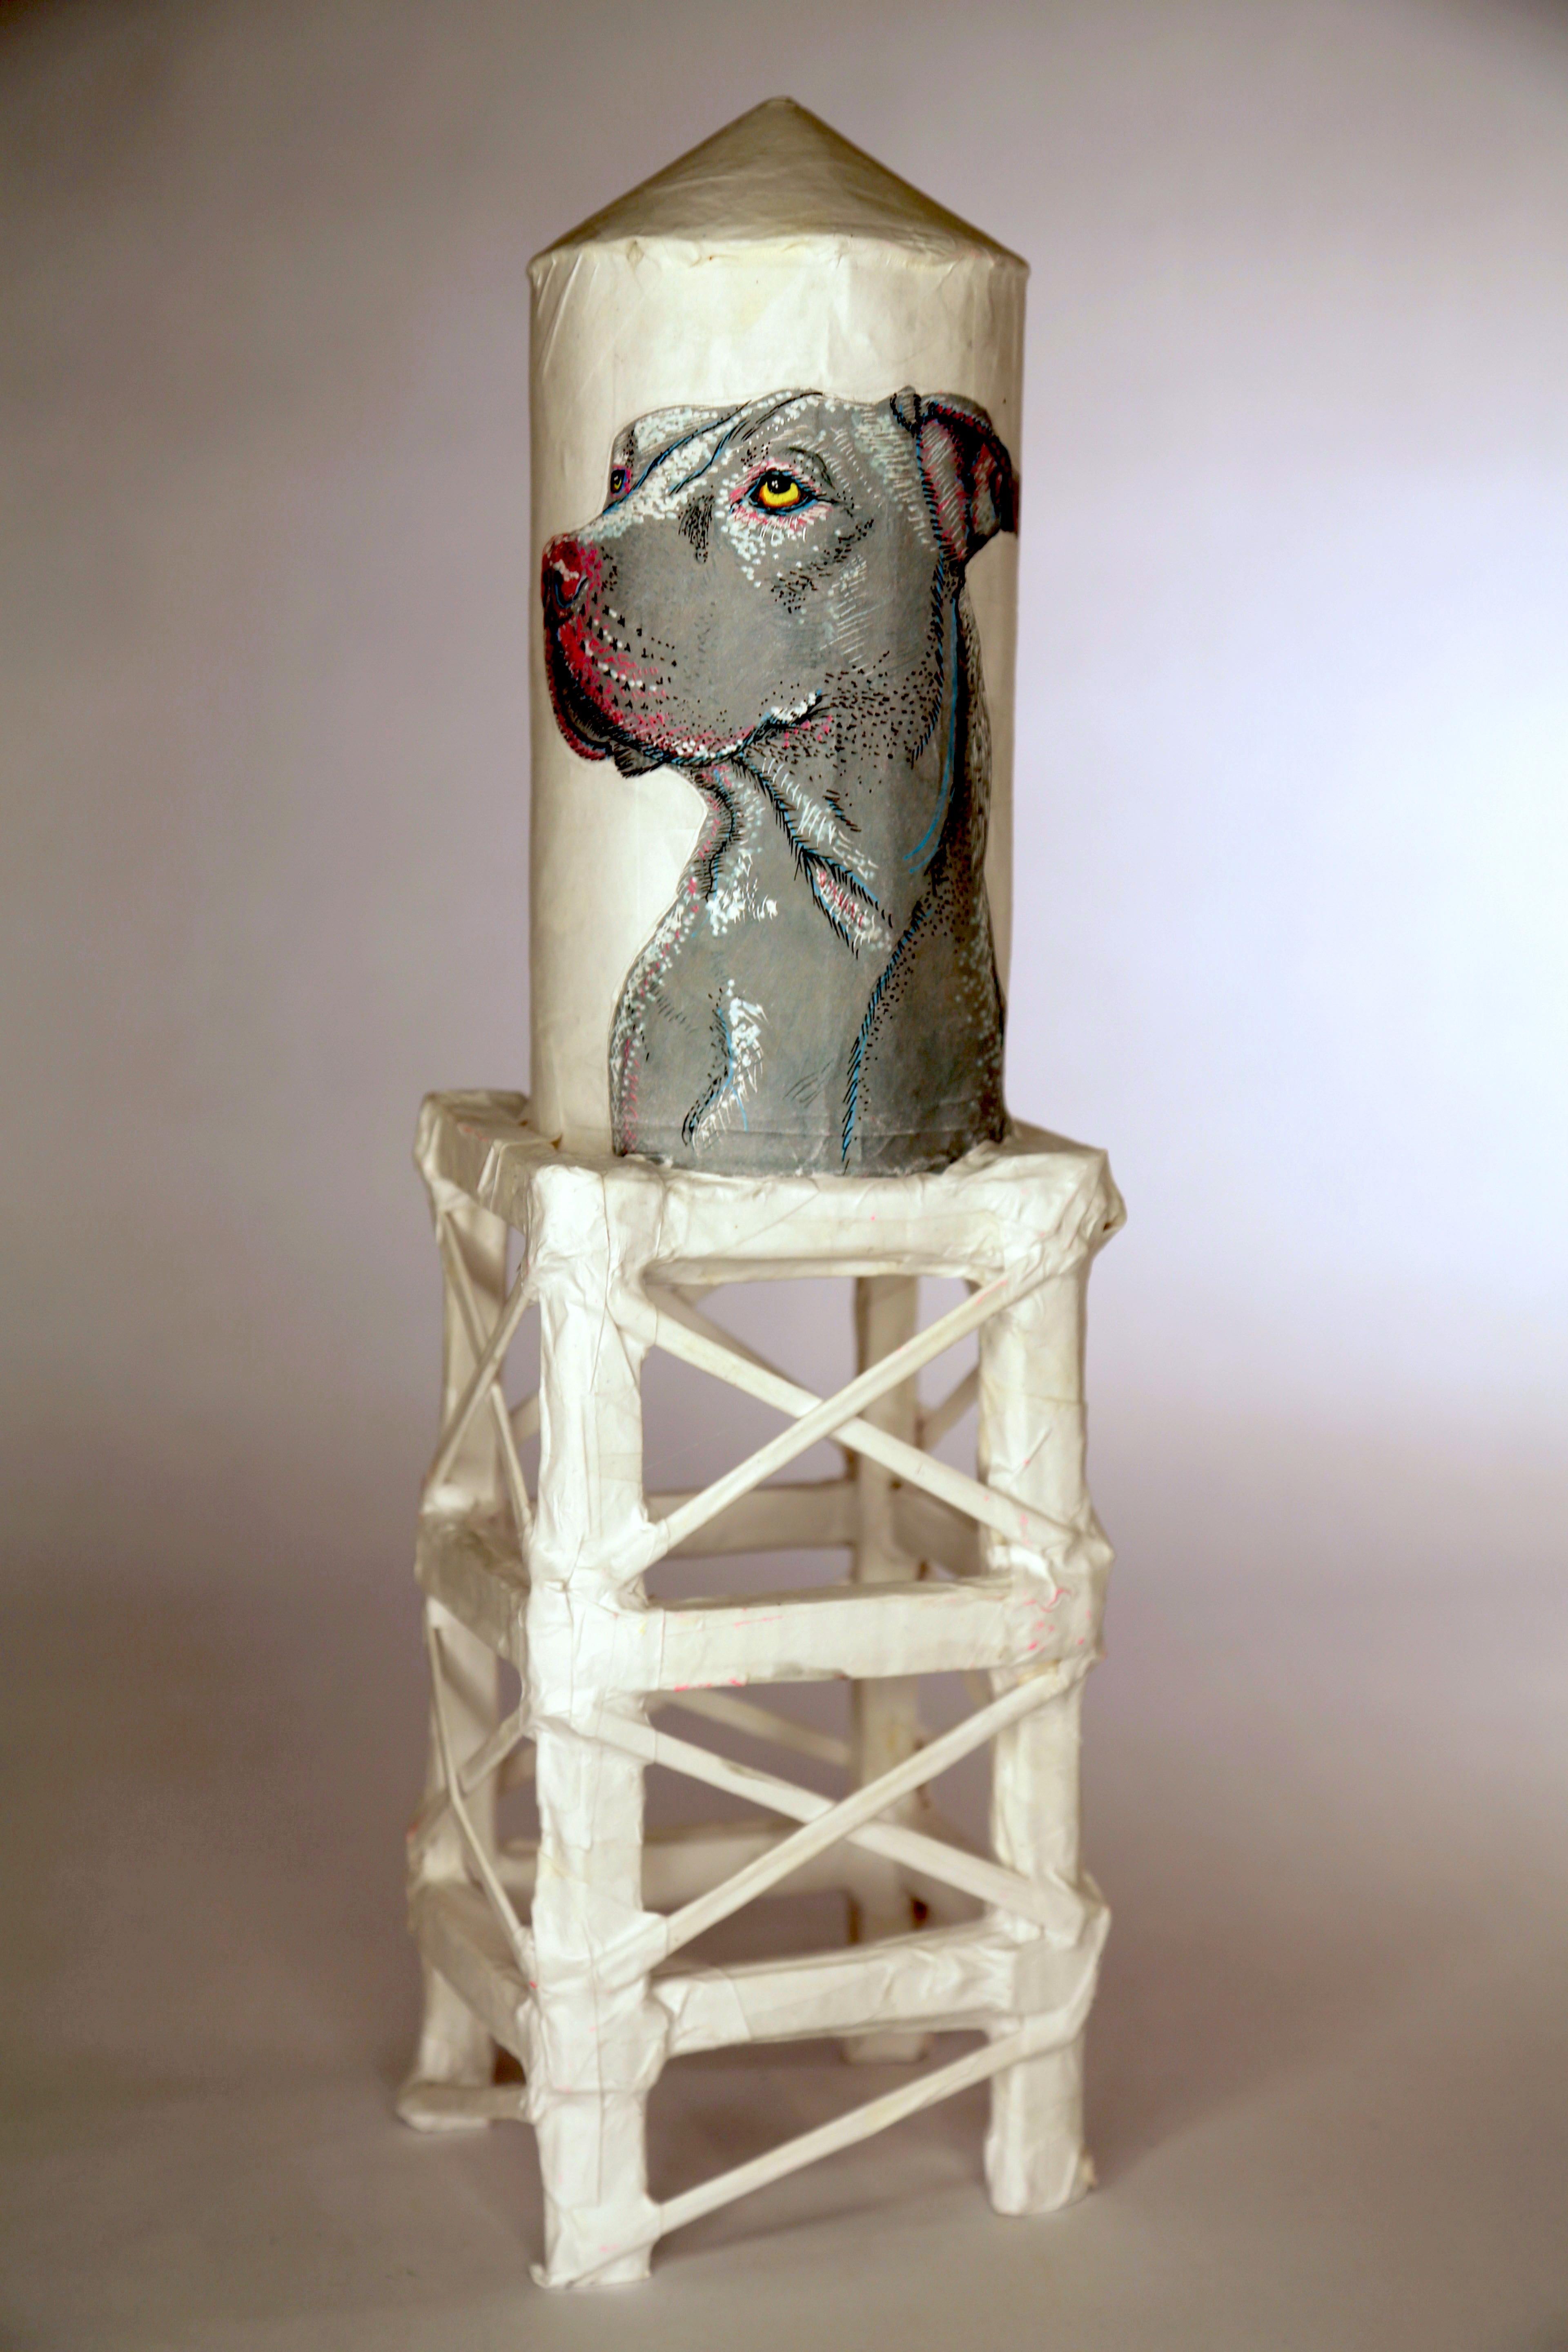  Wasserturm-Skulptur: „Grauer Hund“  – Mixed Media Art von Ethan Minsker